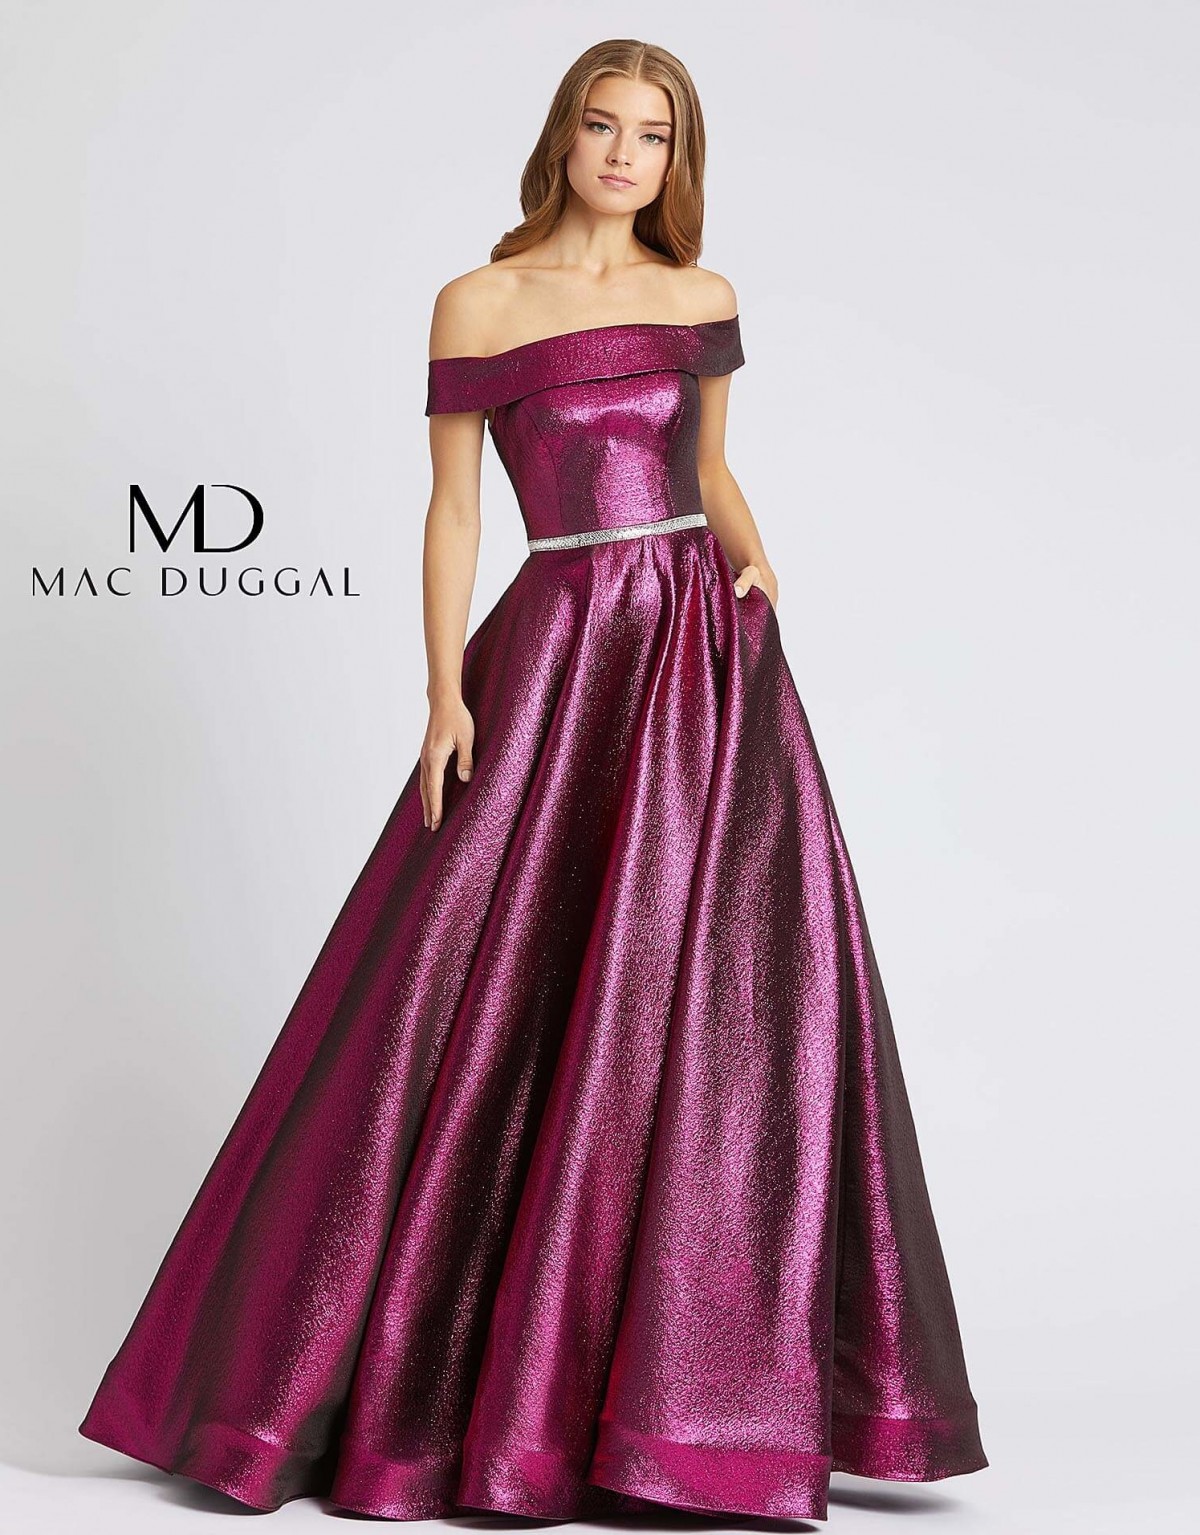 Raspberry Teen Pageant Dress by MacDuggal